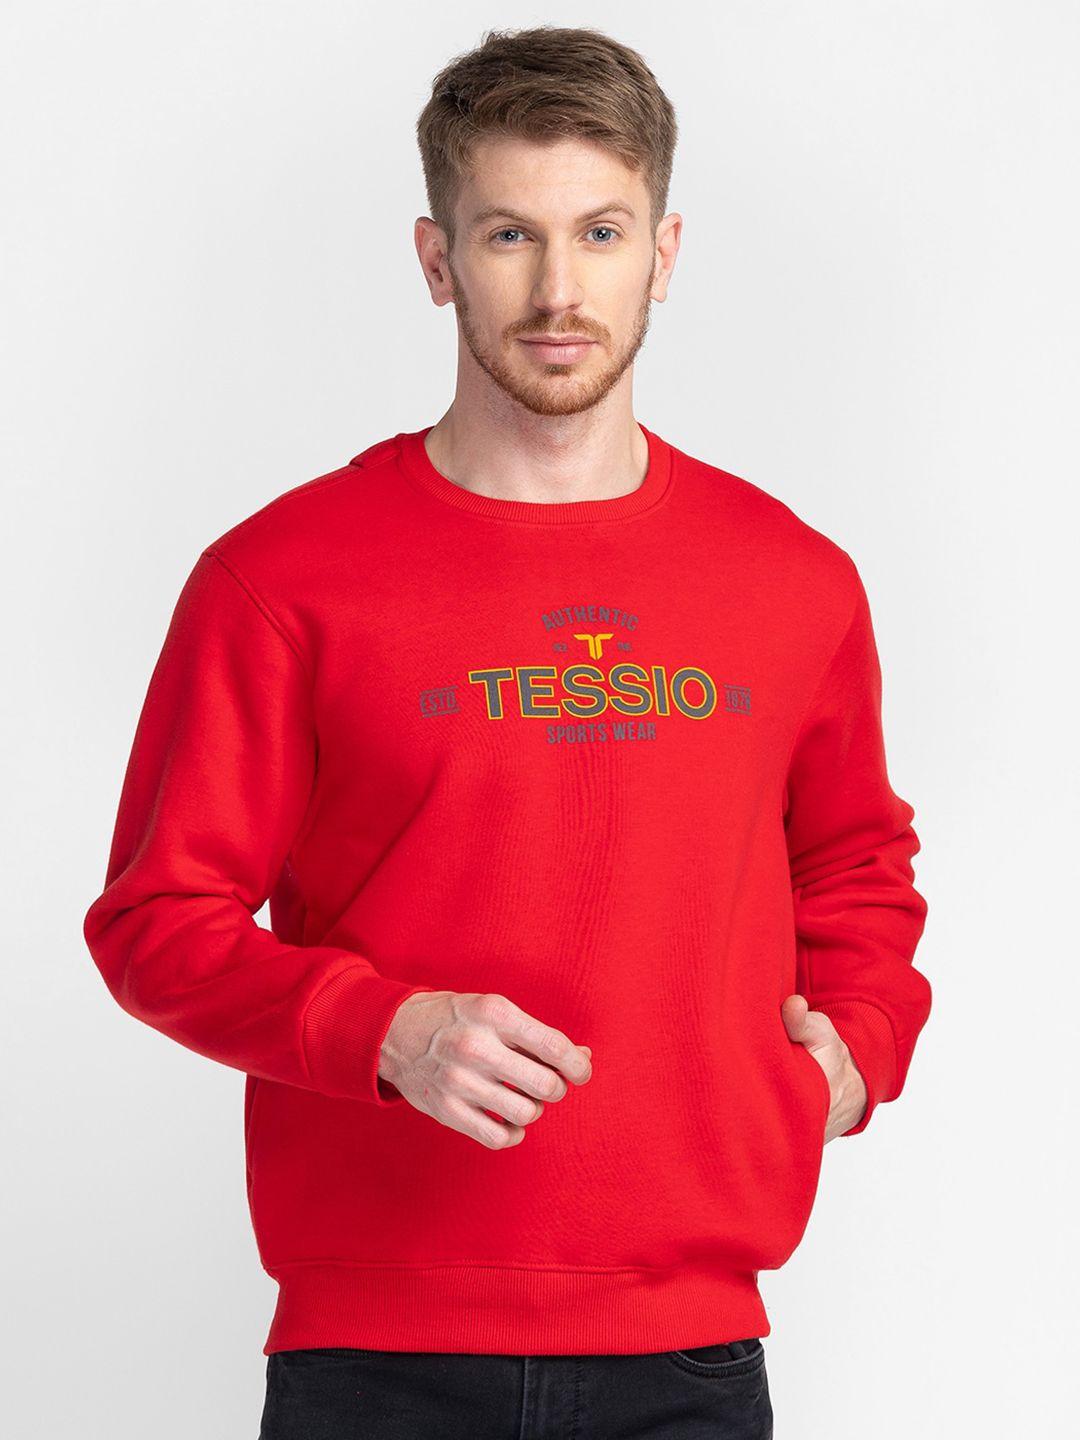 tessio men red printed sweatshirt